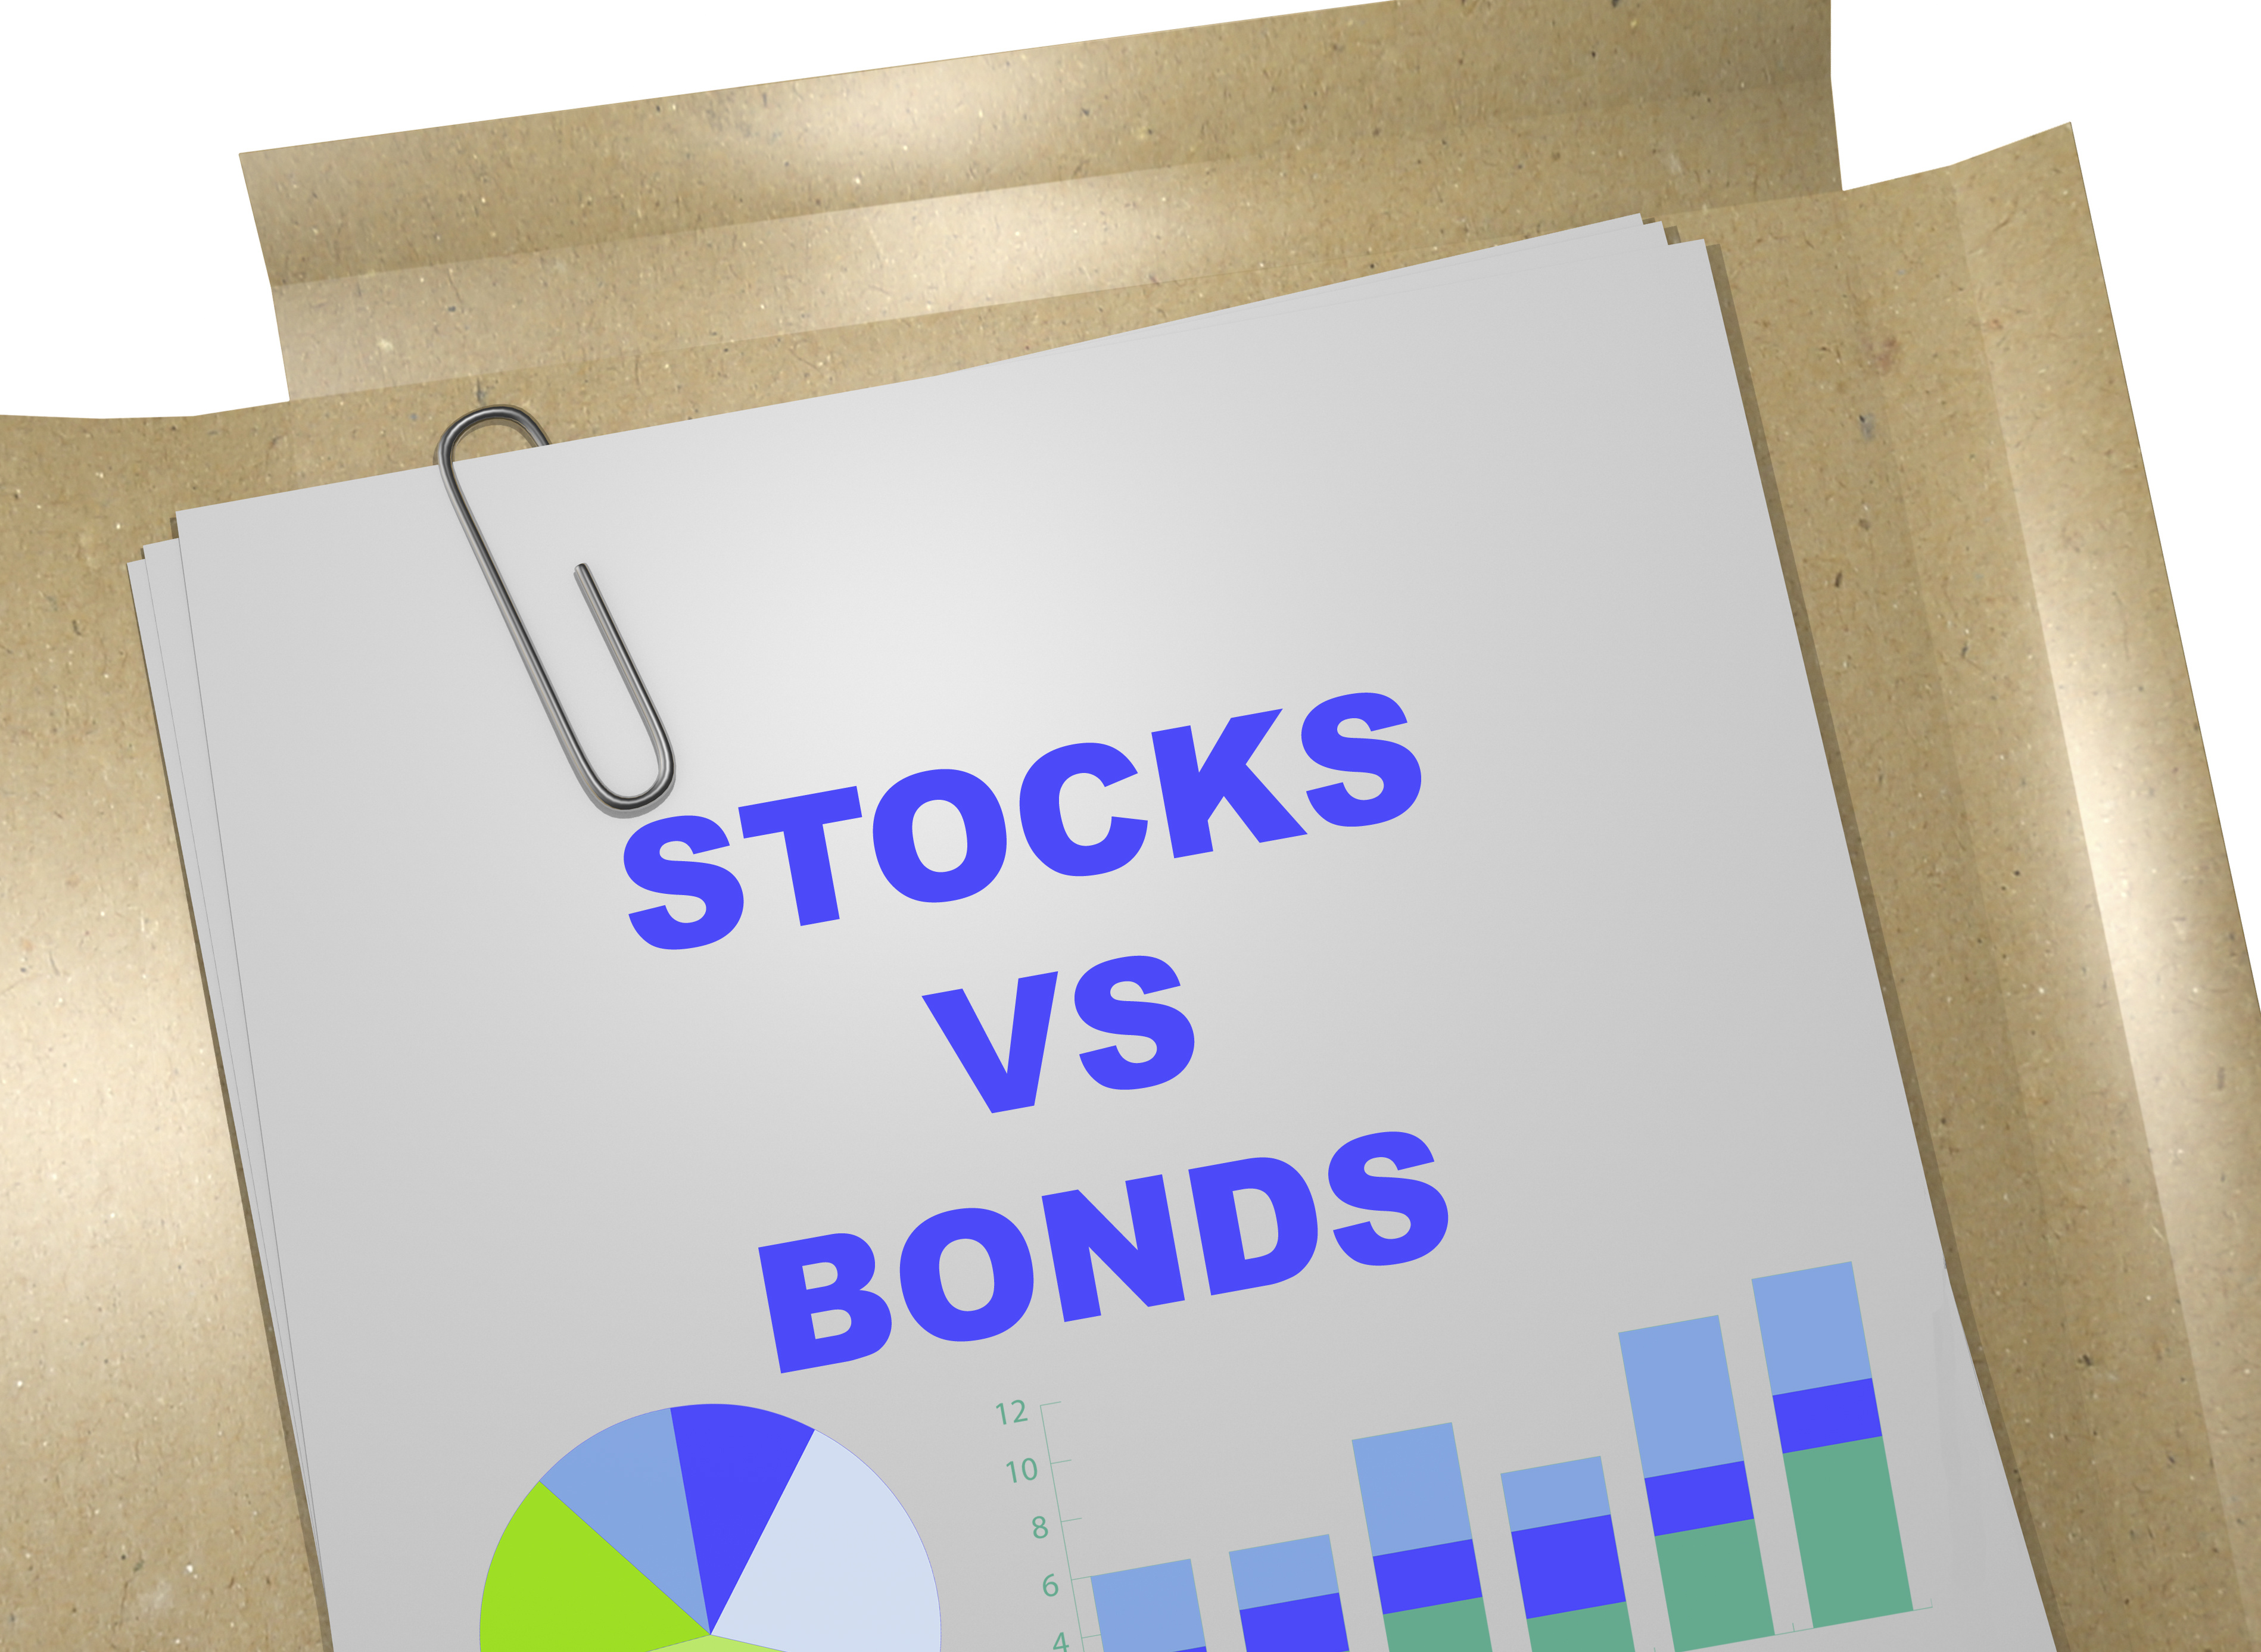 3D illustration of "STOCKS VS BONDS" title on business document